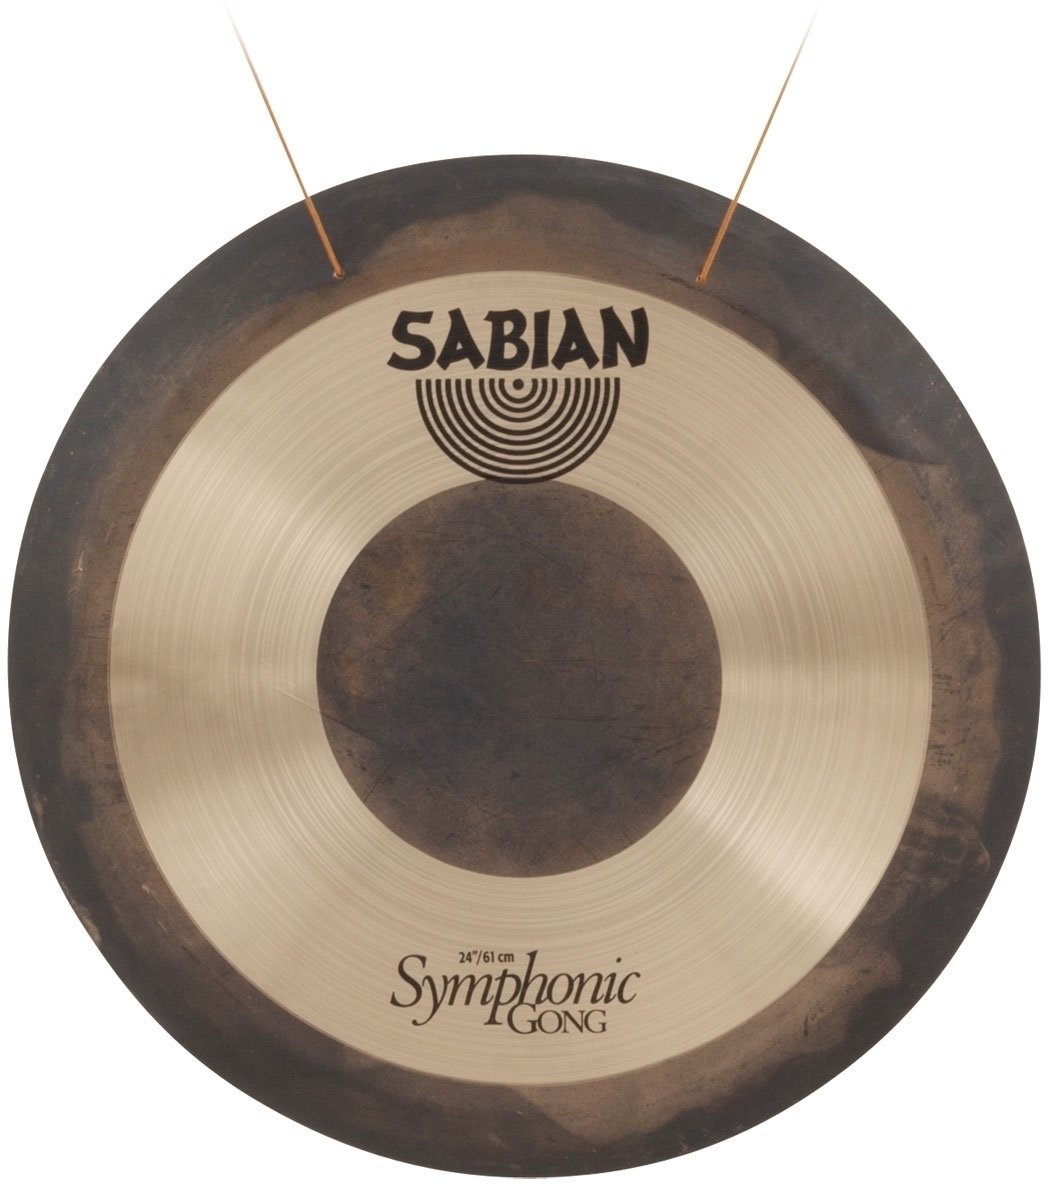 Gong Sabian 52402 Symphonic Medium-Heavy Gong 24"